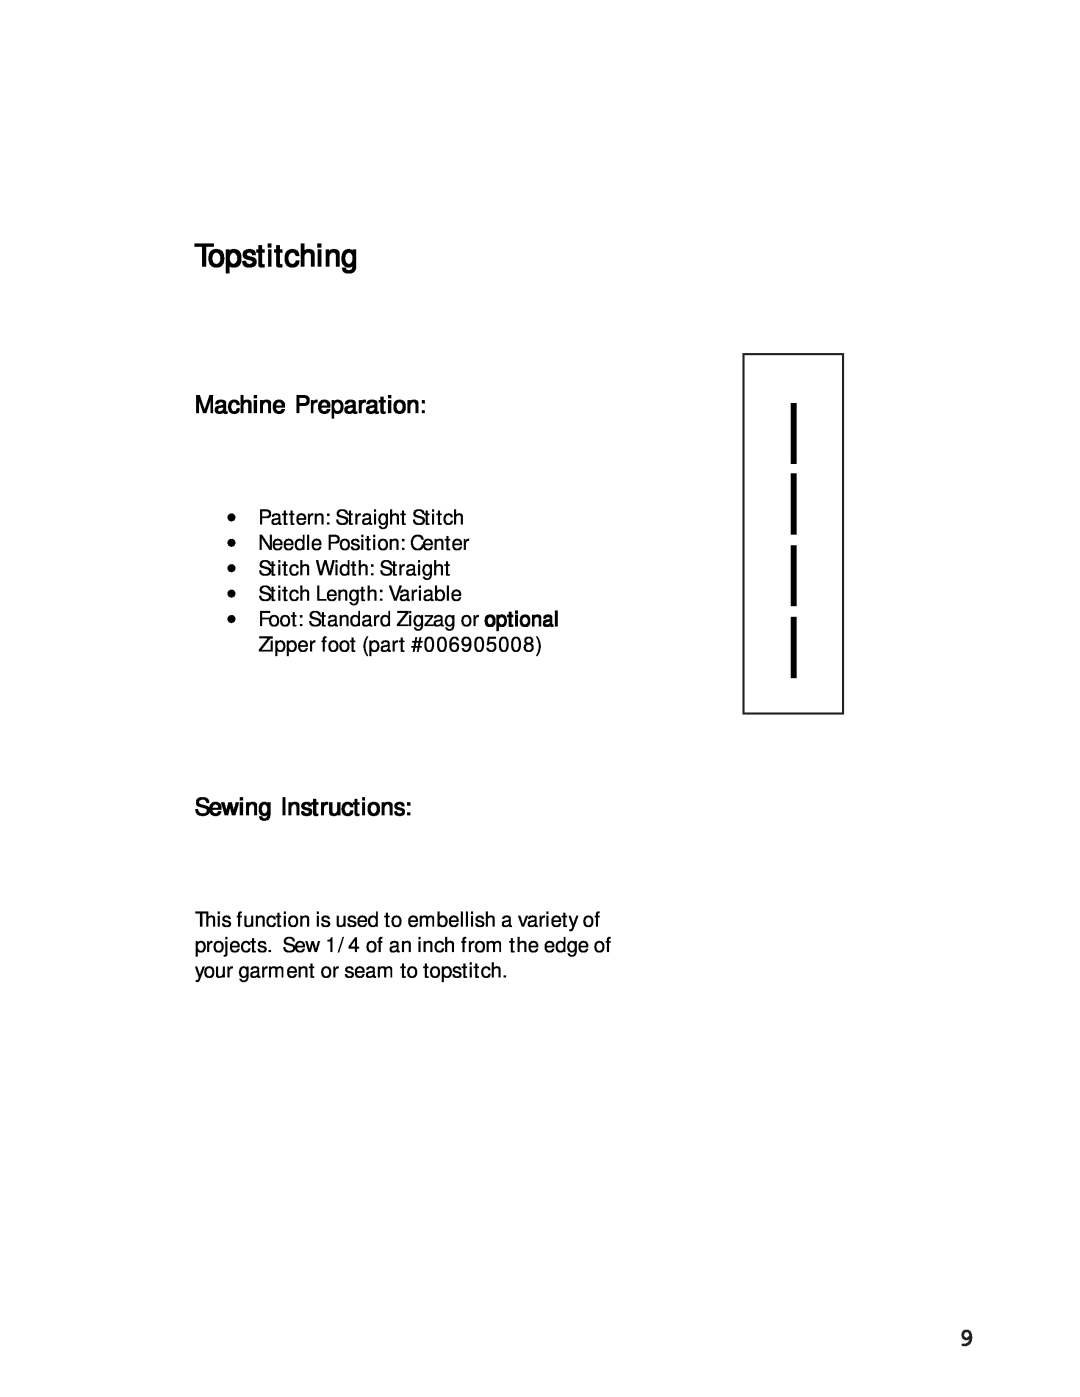 Singer 27 manual Topstitching, Machine Preparation, Sewing Instructions 